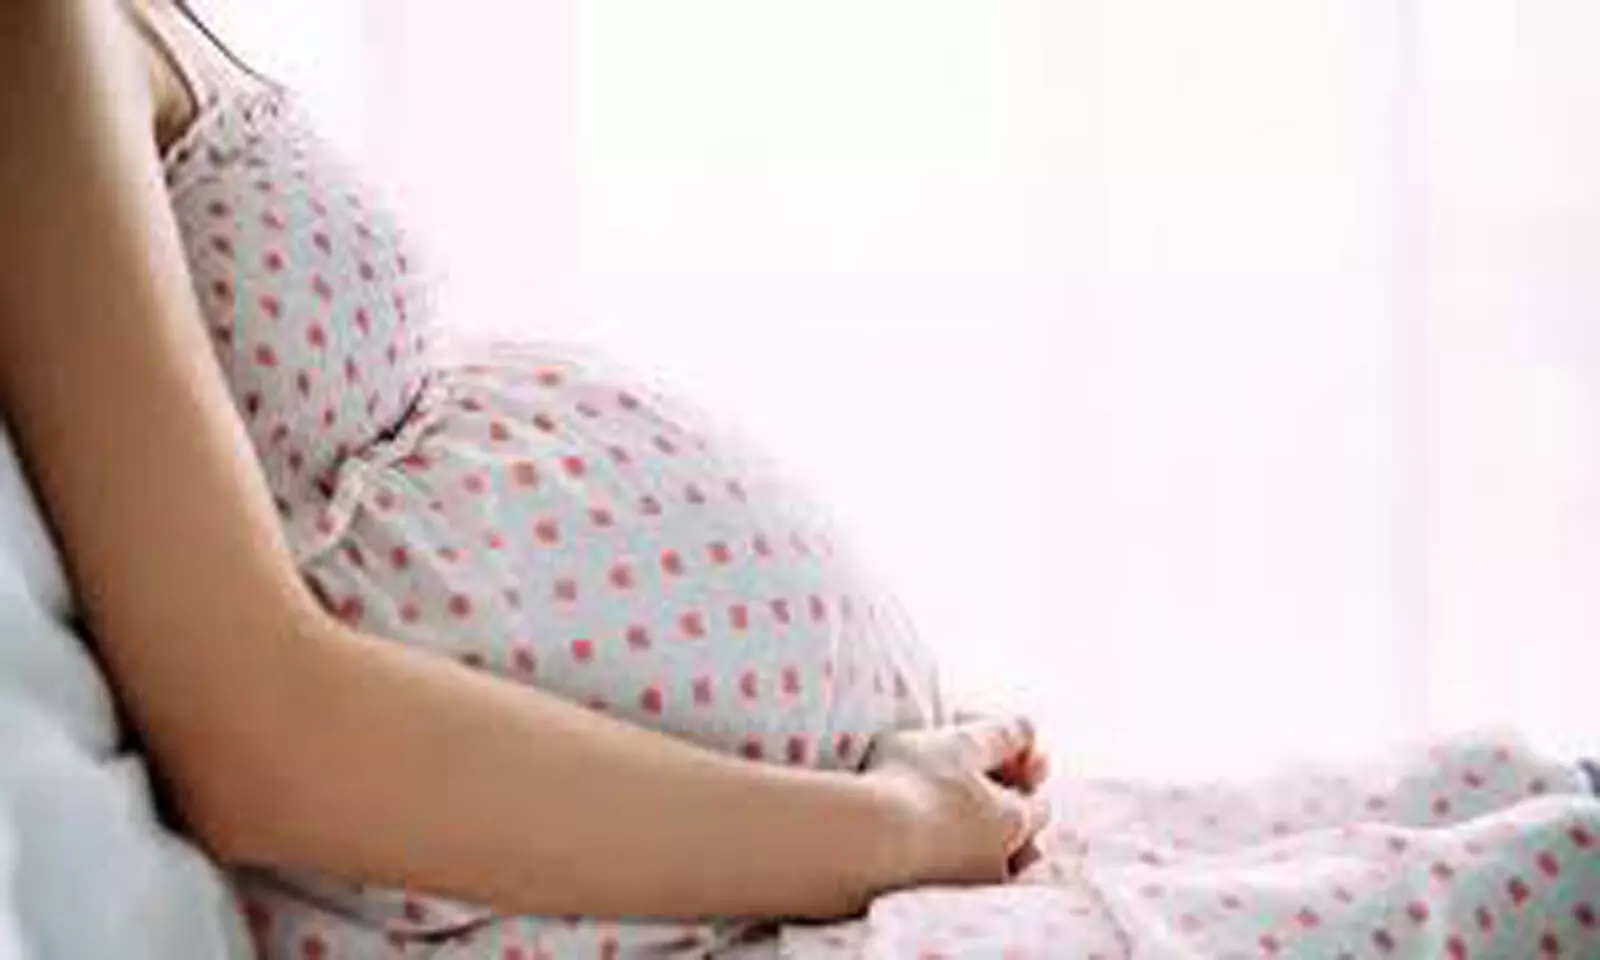 Antenatal dexamethasone significantly reduces neonatal deaths in preterm babies: NEJM